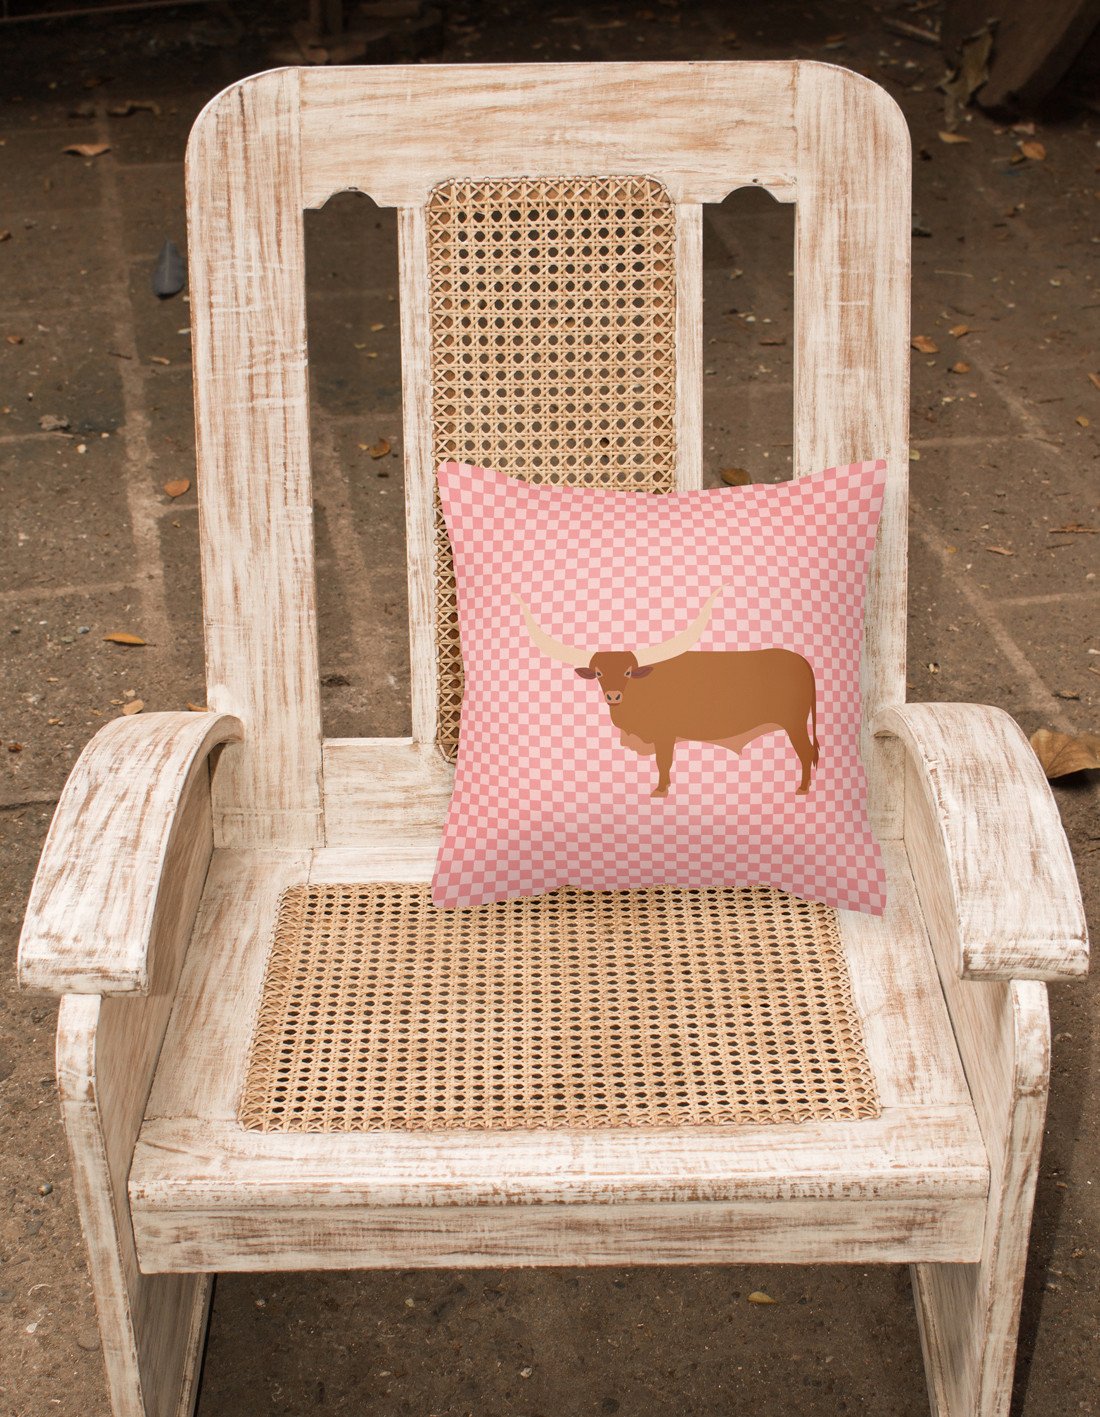 Ankole-Watusu Cow Pink Check Fabric Decorative Pillow BB7823PW1818 by Caroline's Treasures